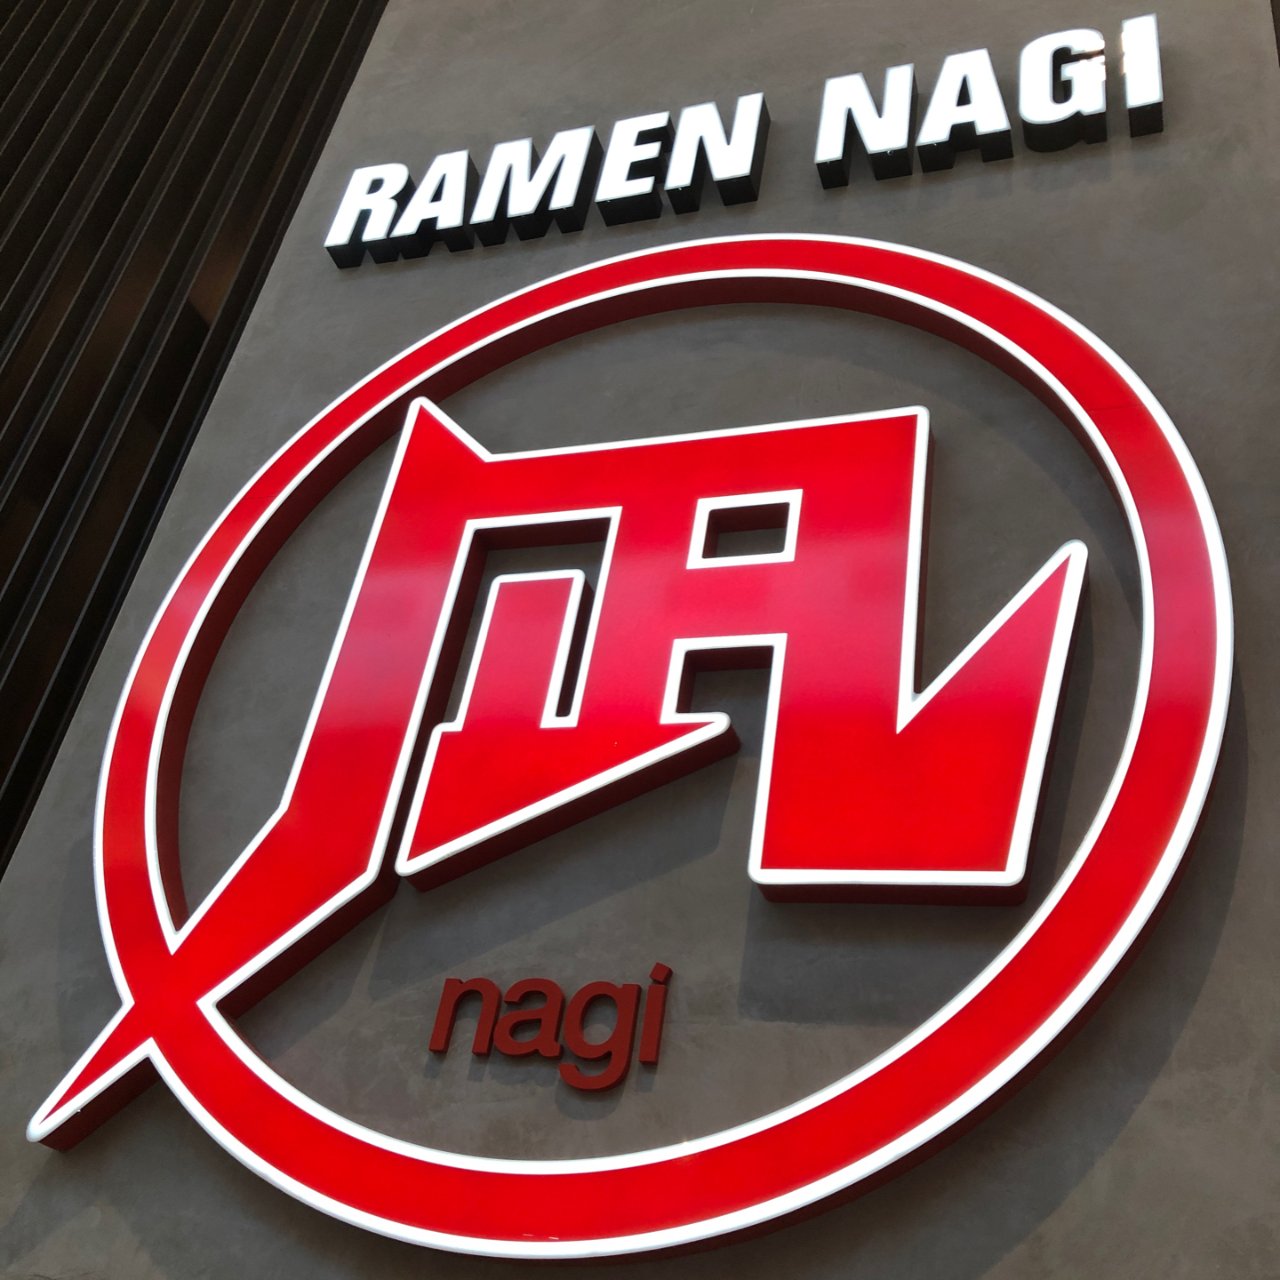 Ramen nagi,日本拉麵